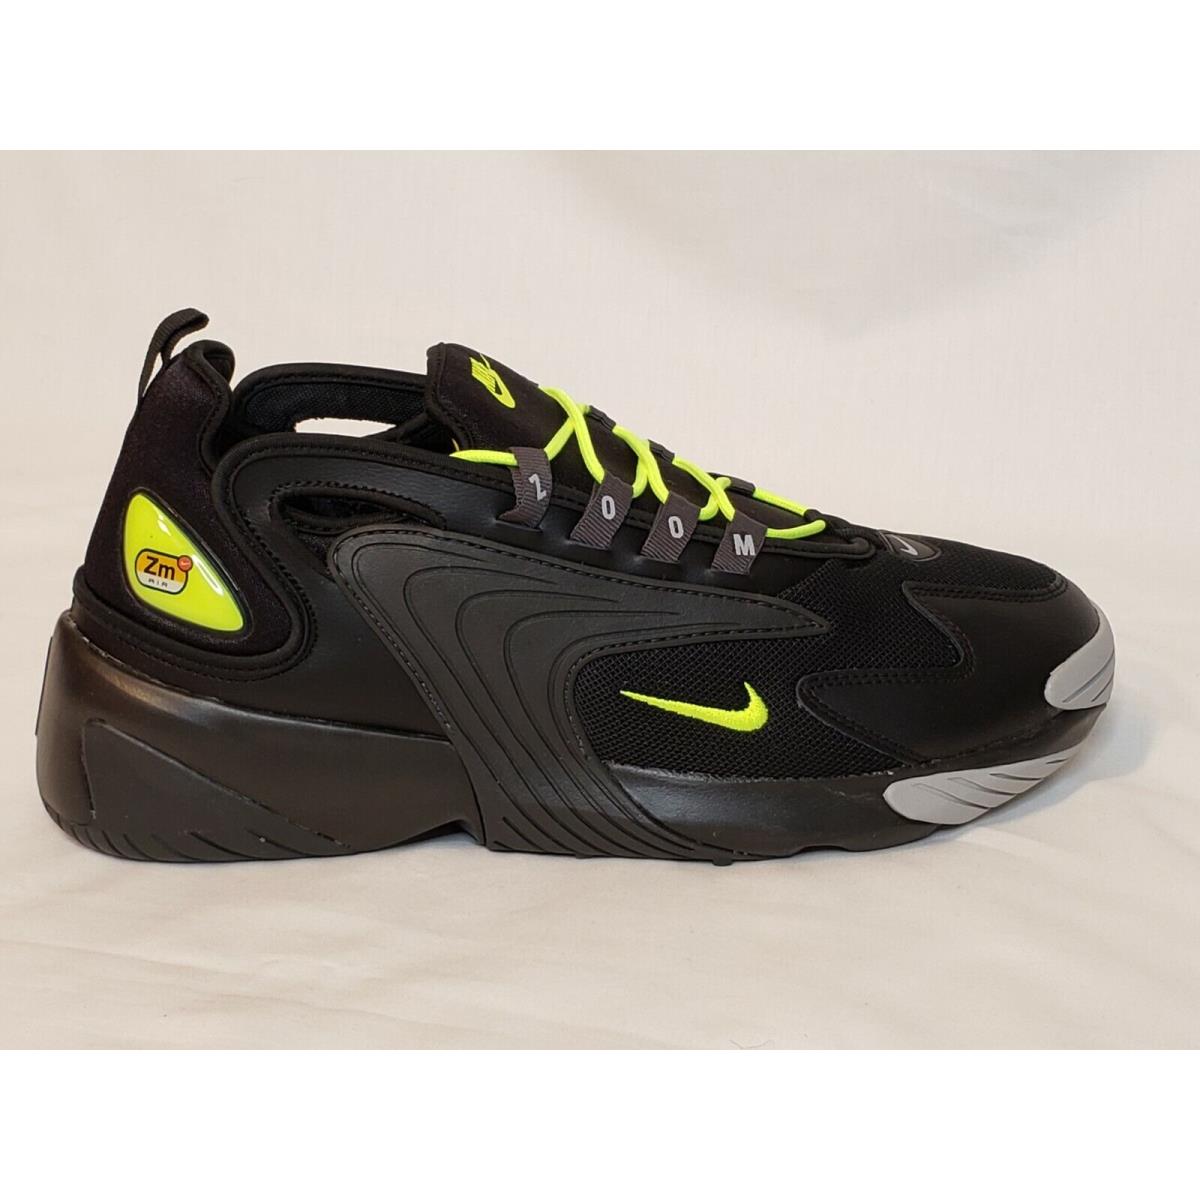 Nike shoes Zoom - Black/Volt-Anthracite 3